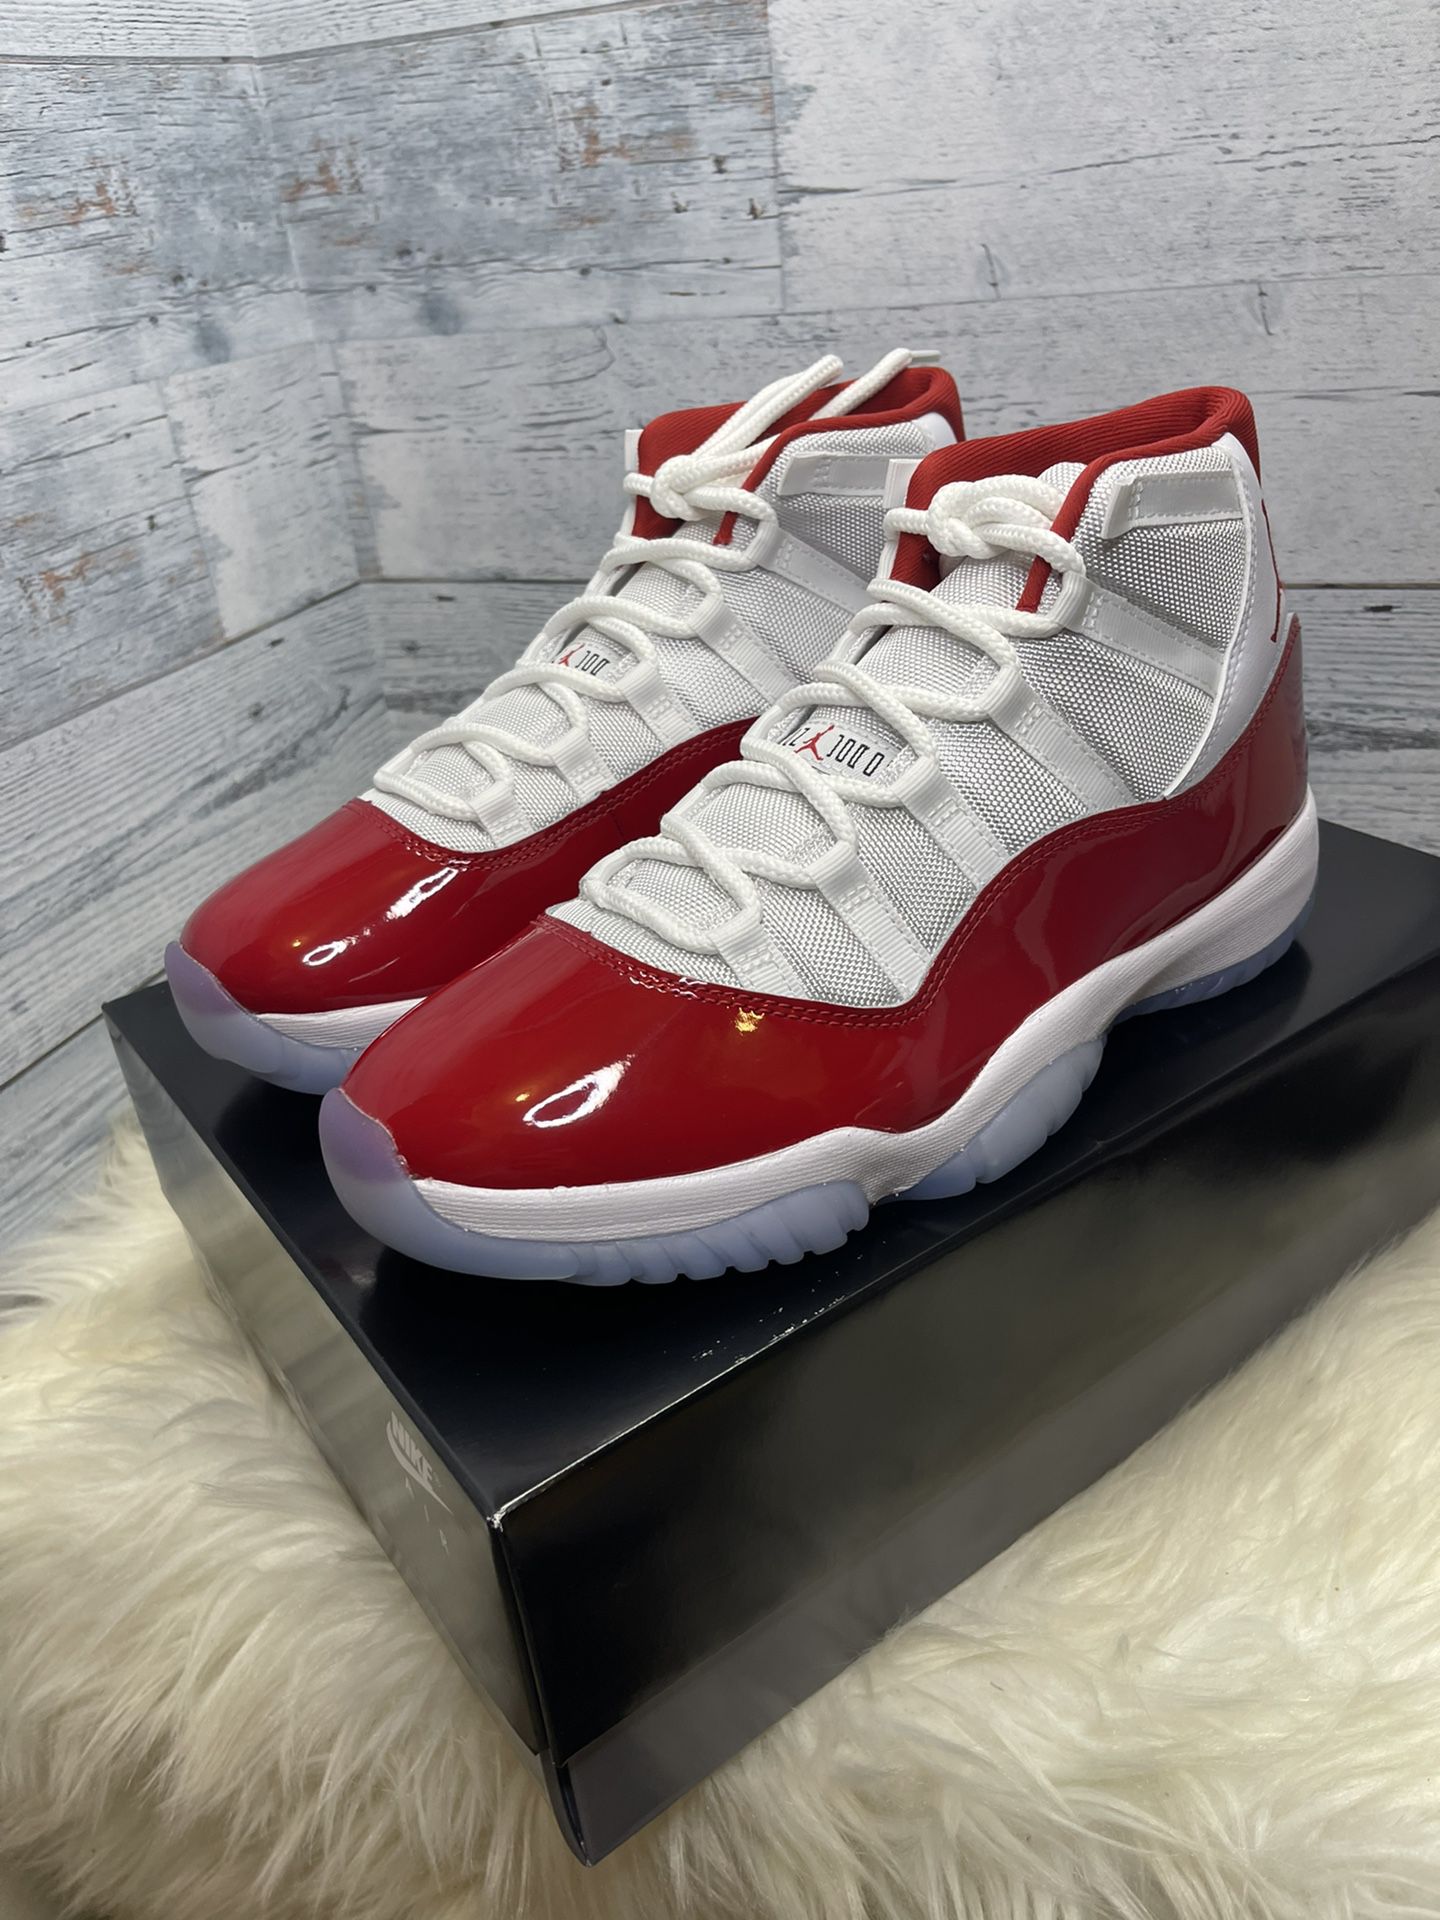 New Jordan 11 Retro Cherry Sneakers 